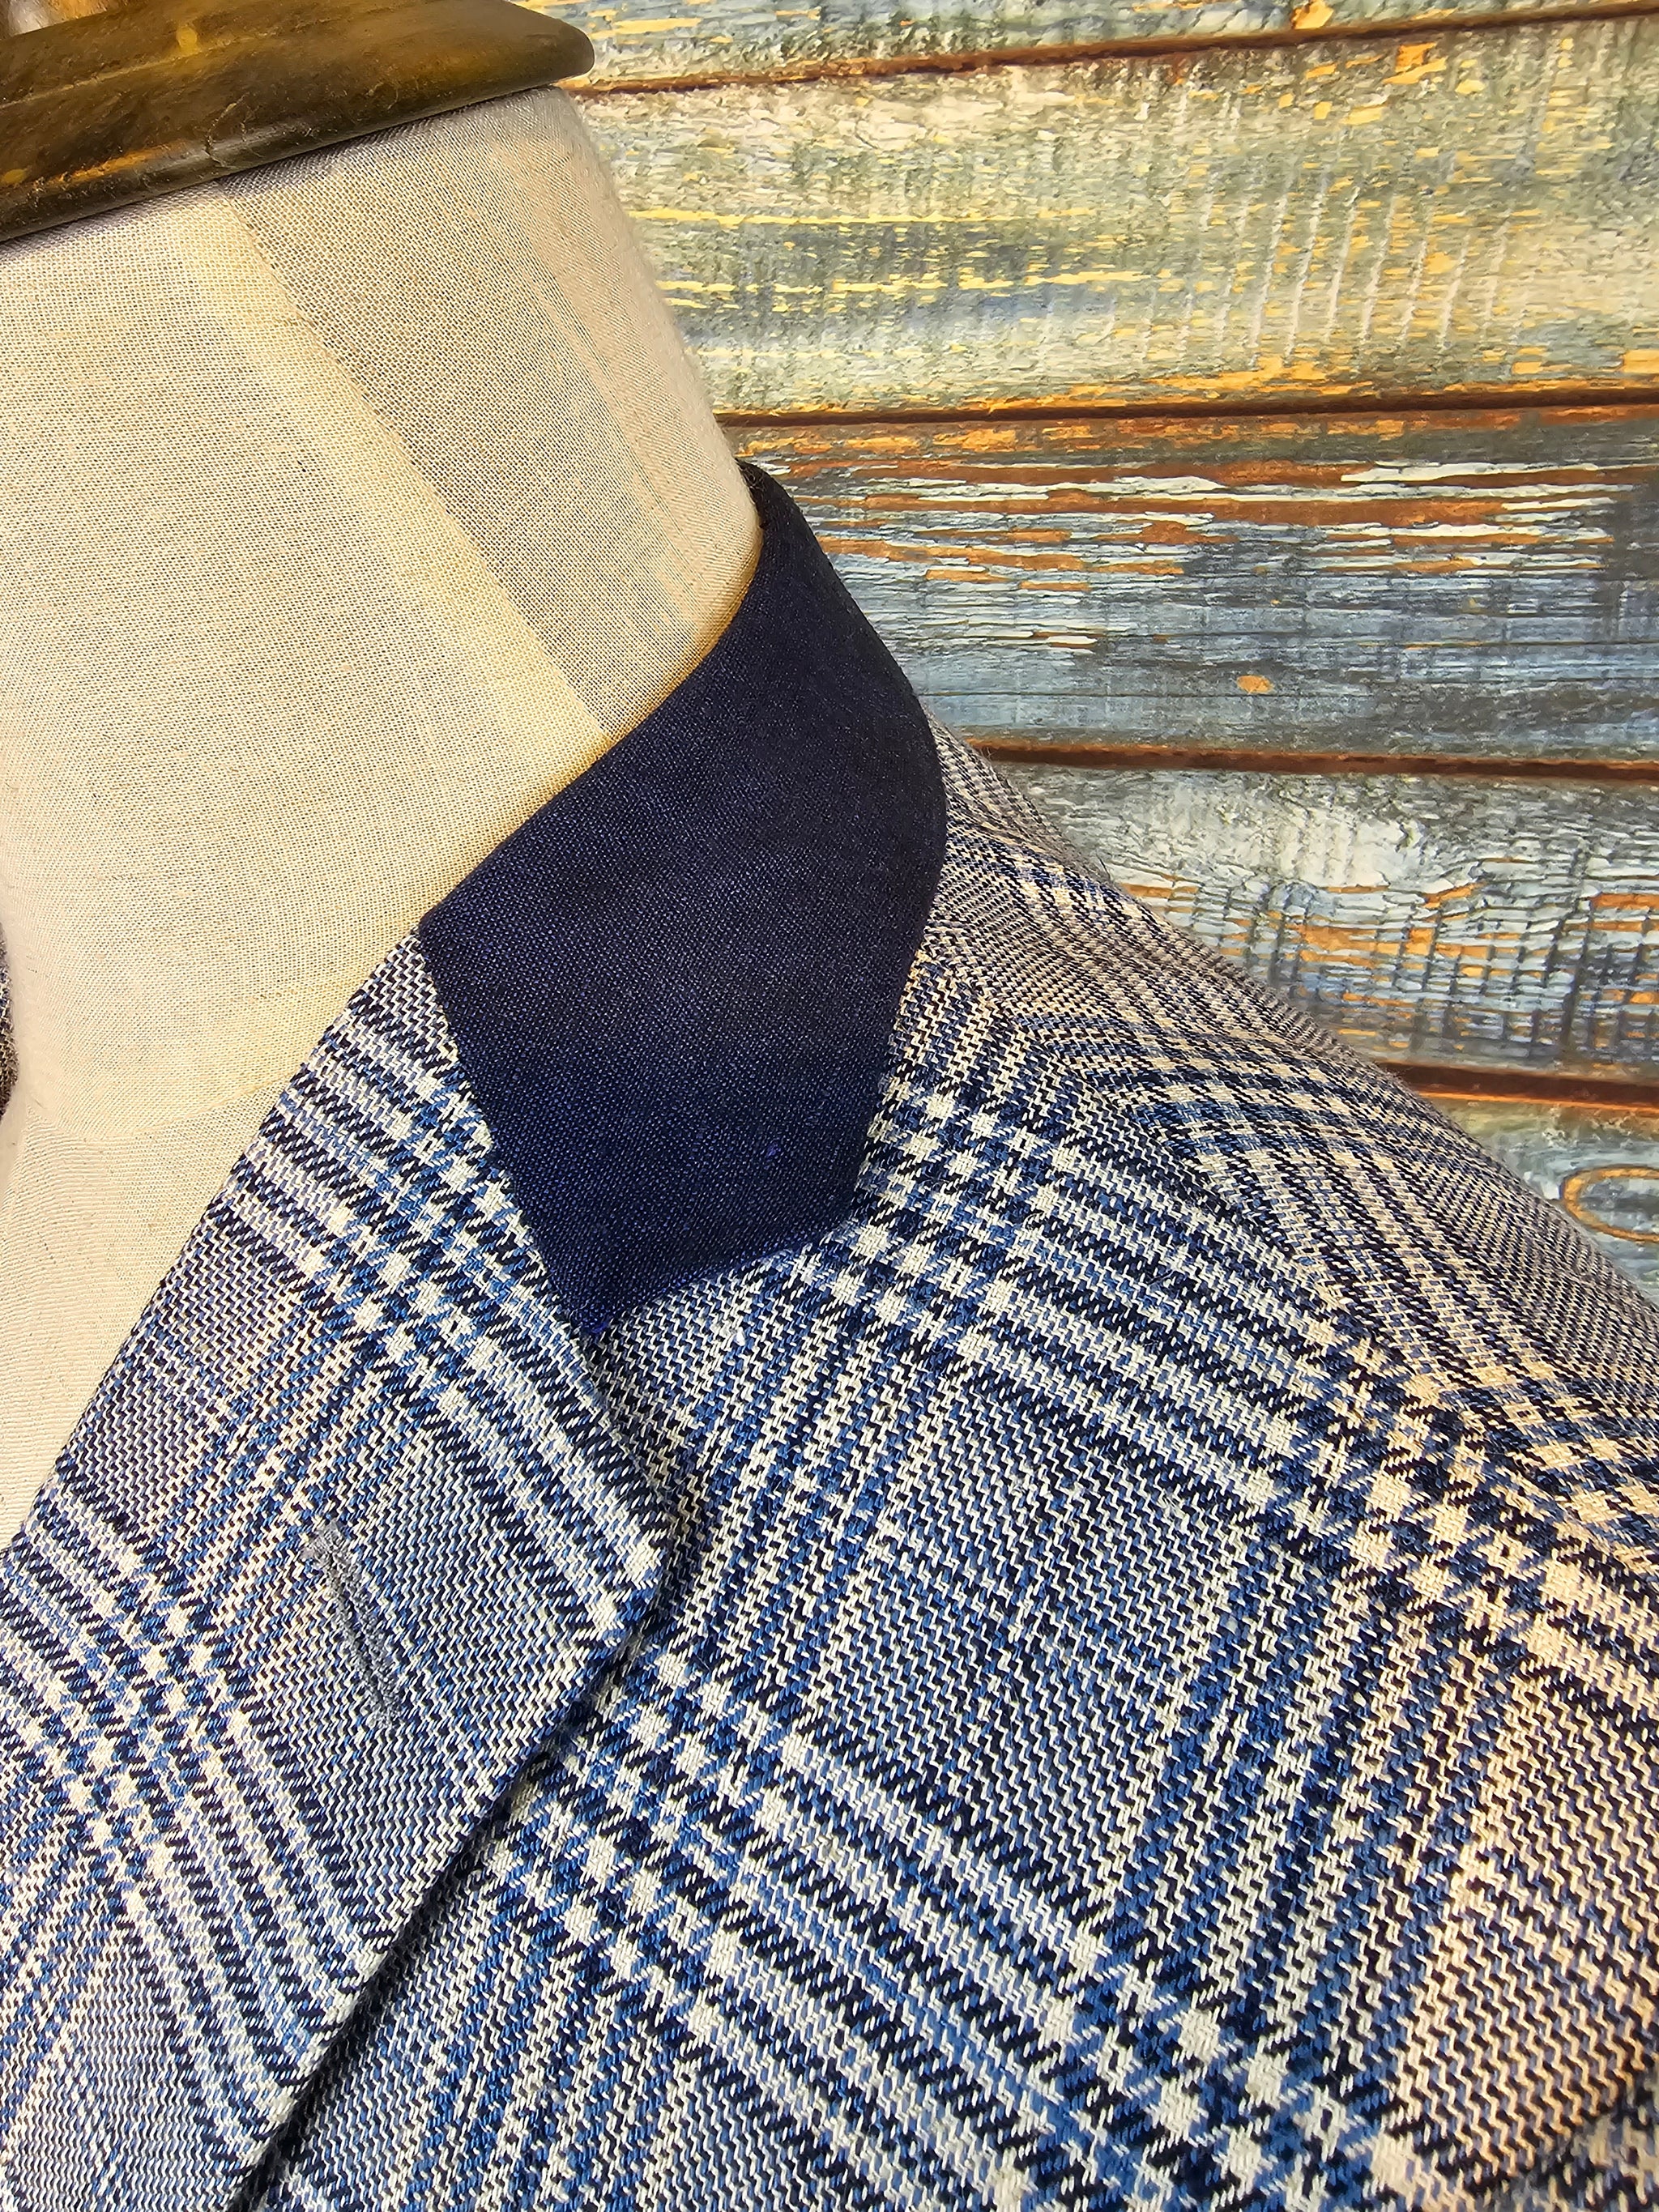 Mazzelli "Lanificio fabric" Cotton/Linen overcheck Jacket